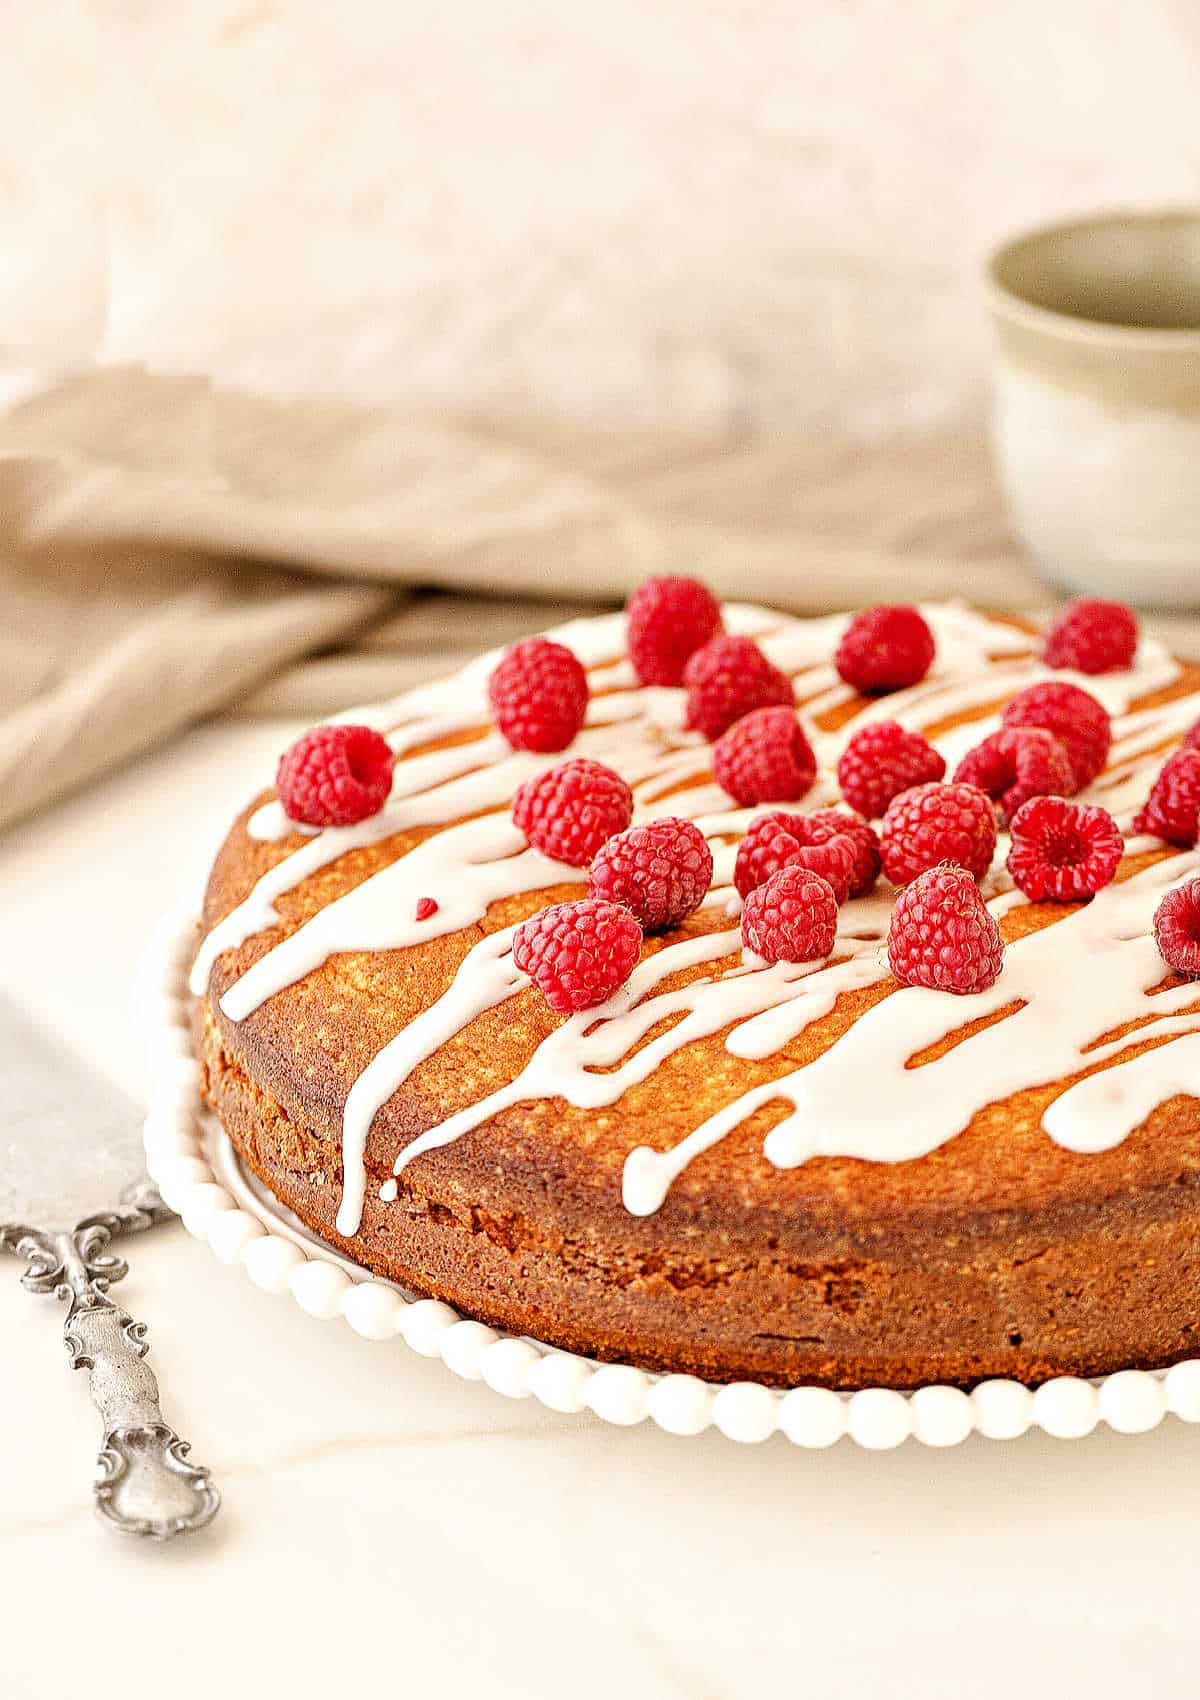 Raspberry topped glazed round coffee cake. White surface, beige background.